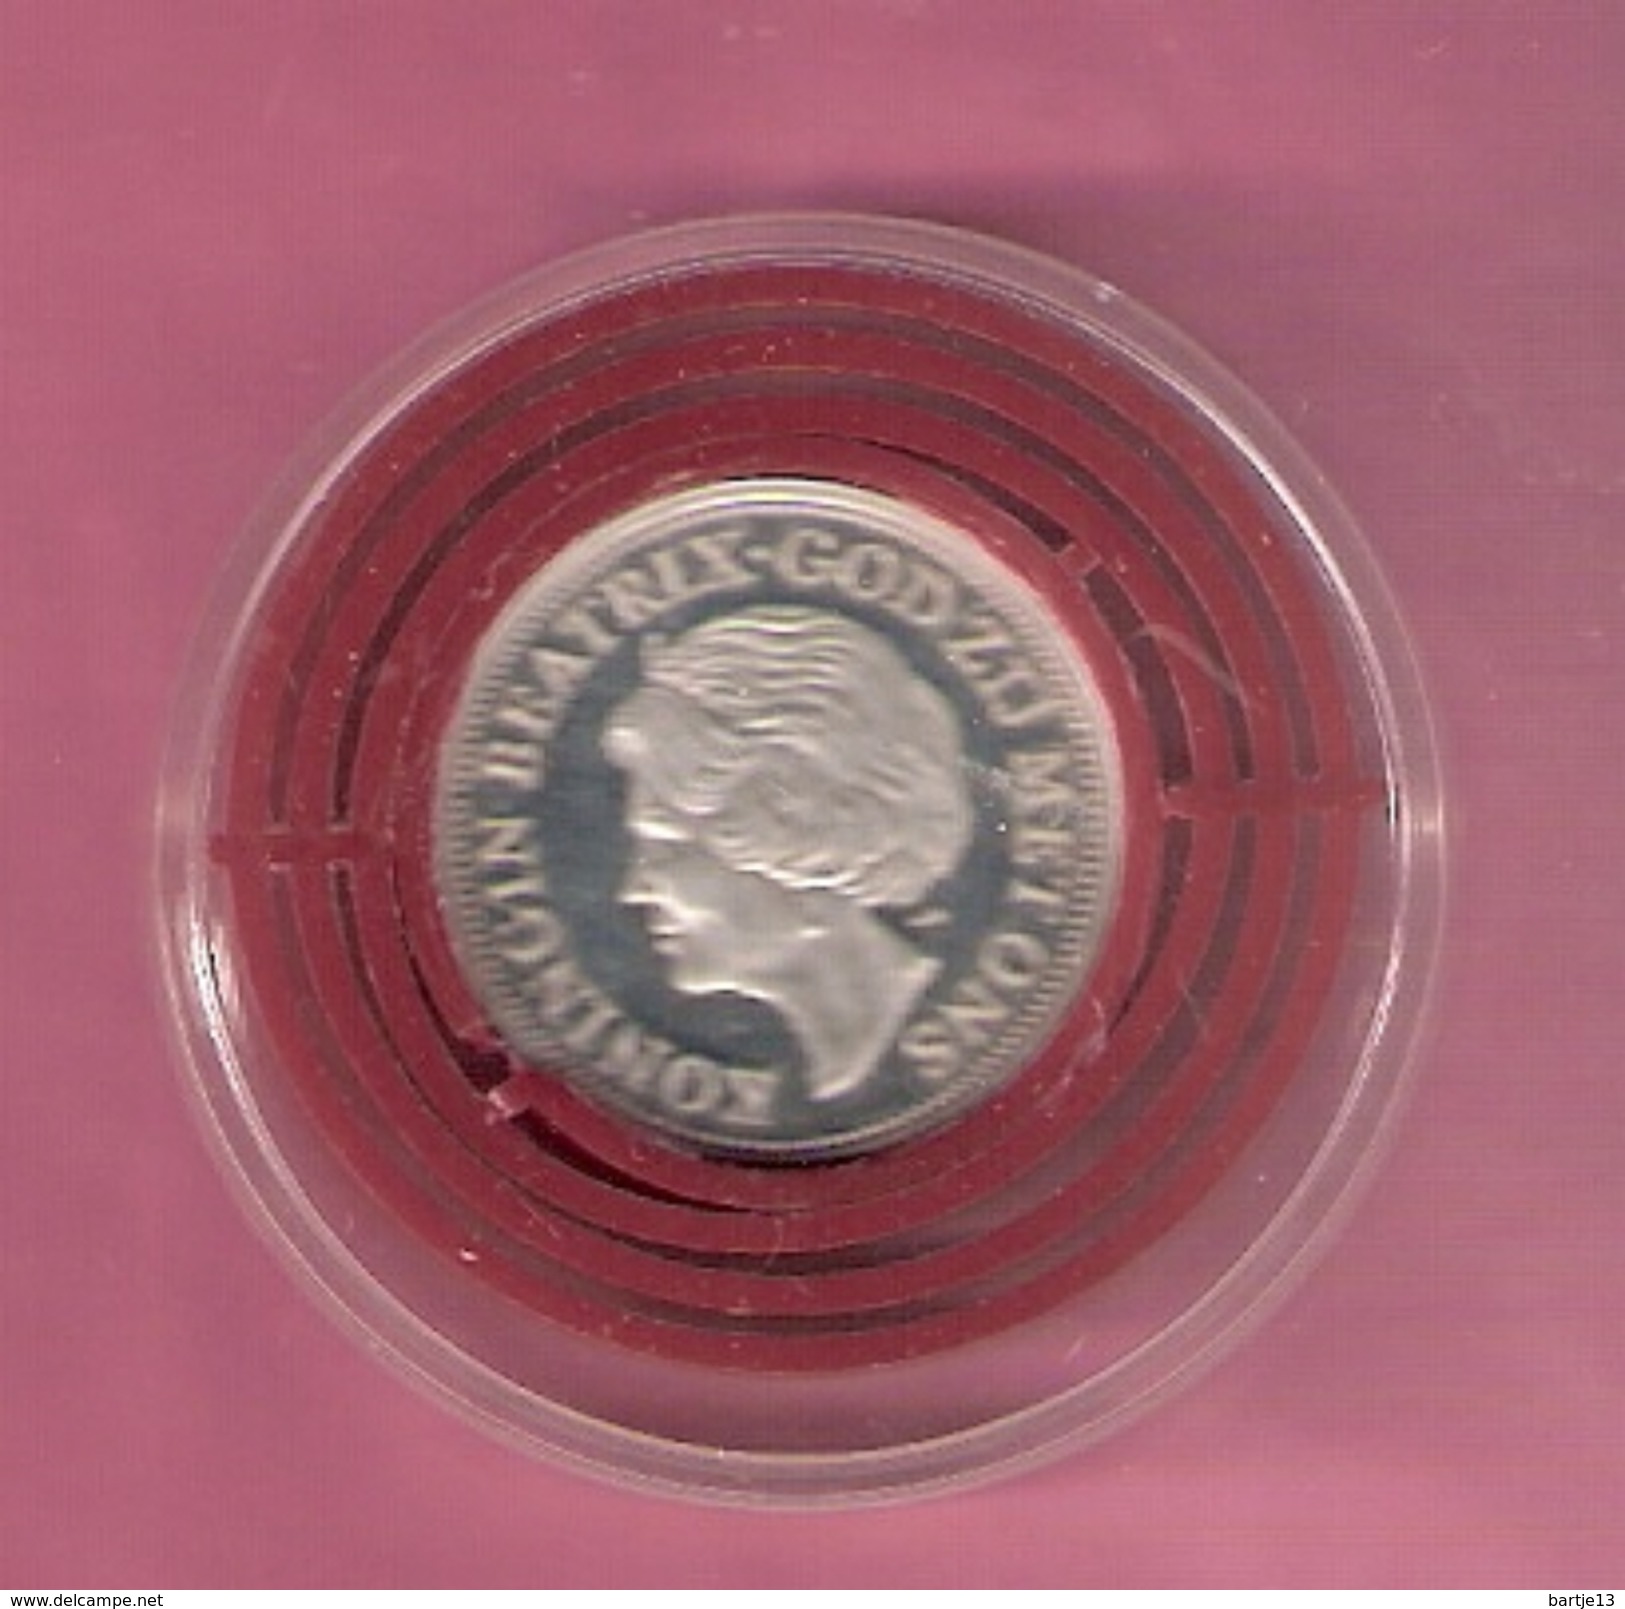 NEDERLAND SILVER MEDAL 1990 BEATRIX 10 YEAR QUEEN - Souvenir-Medaille (elongated Coins)